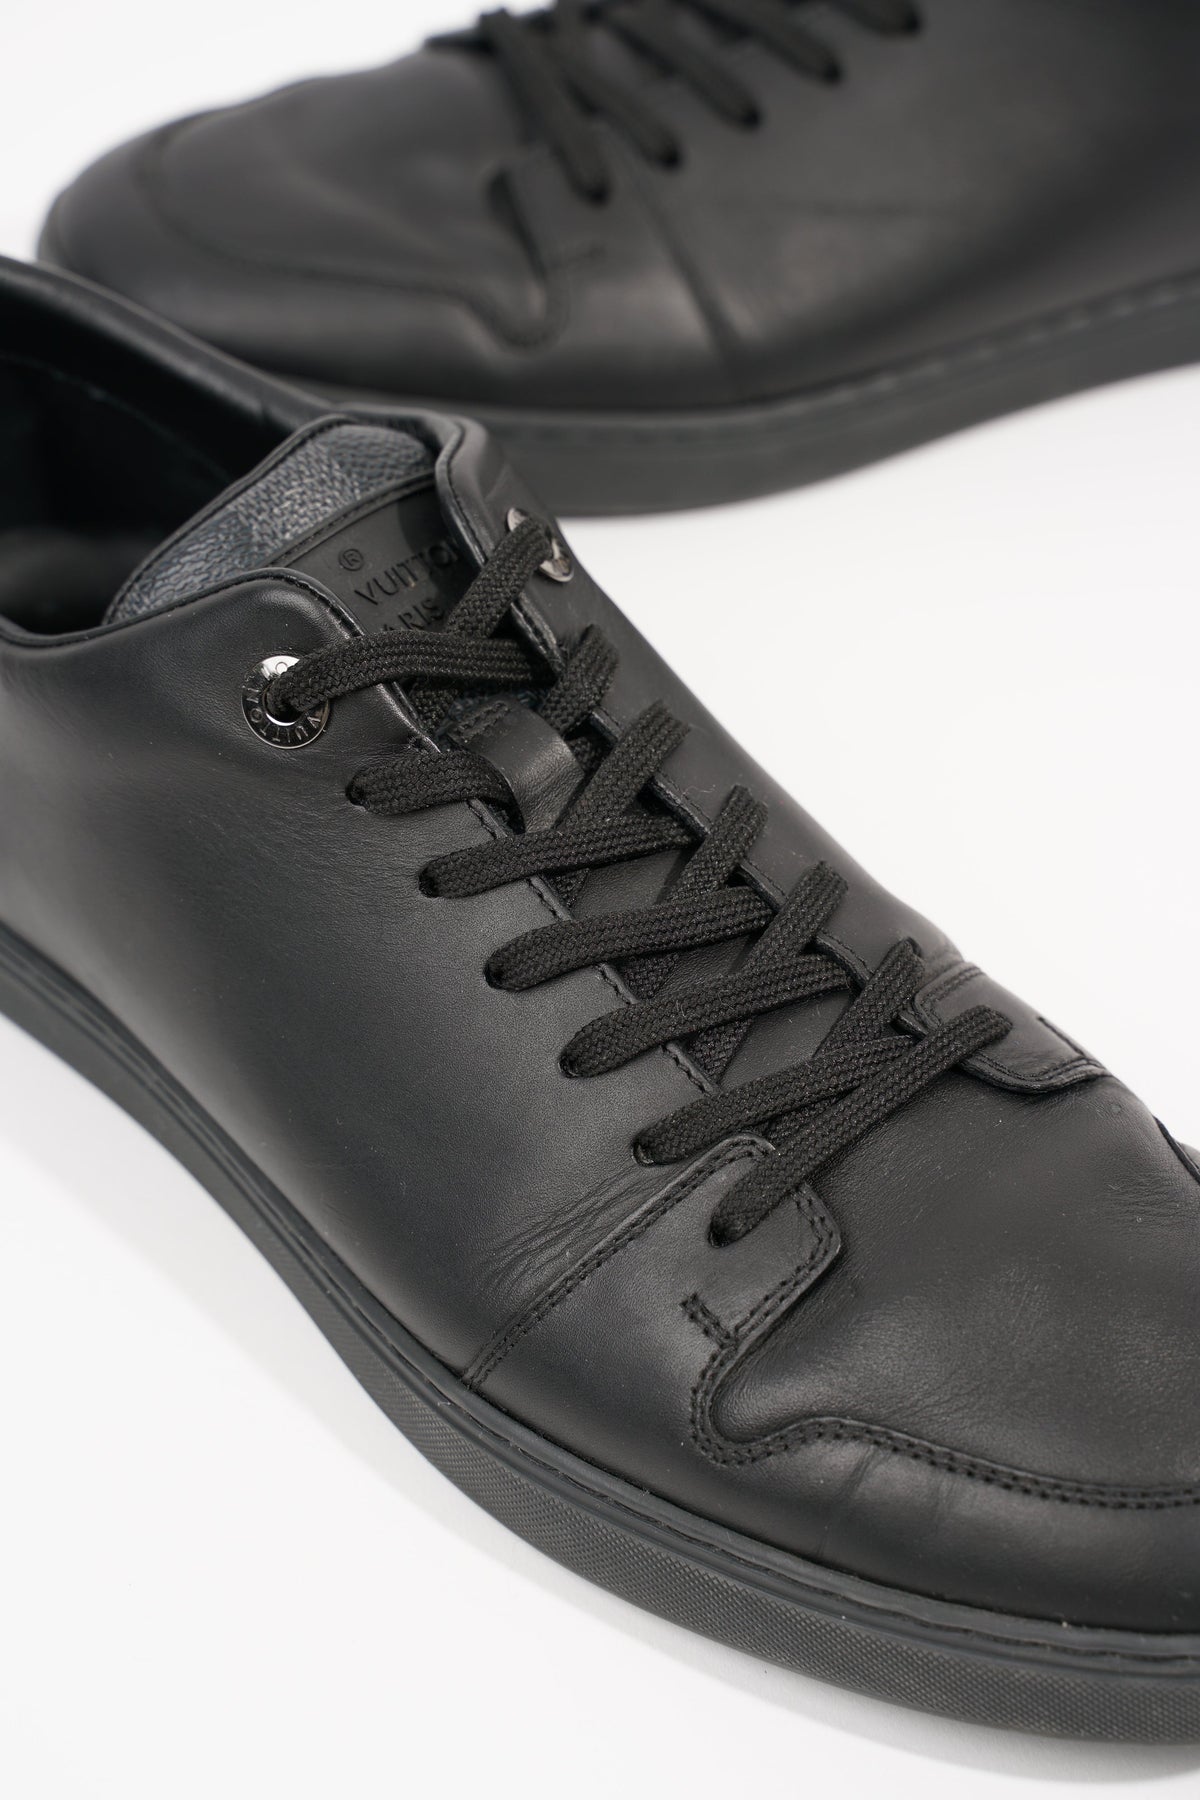 LOUIS VUITTON damier sneakers trainers UK10.5 / US11.5 /44.5 shoes Authentic